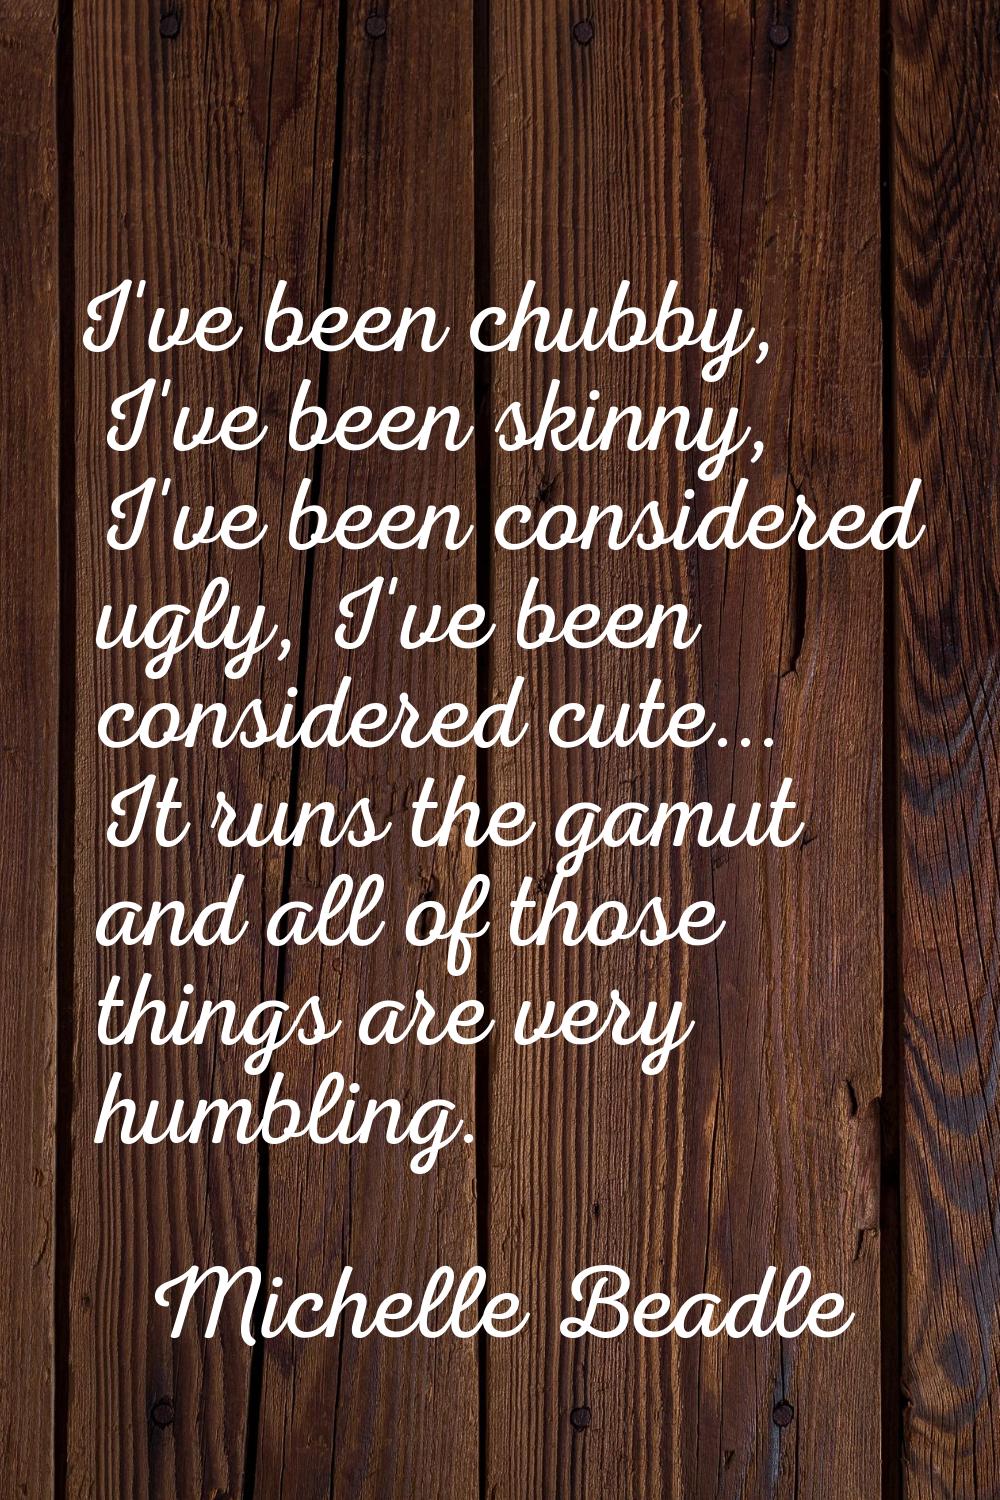 I've been chubby, I've been skinny, I've been considered ugly, I've been considered cute... It runs